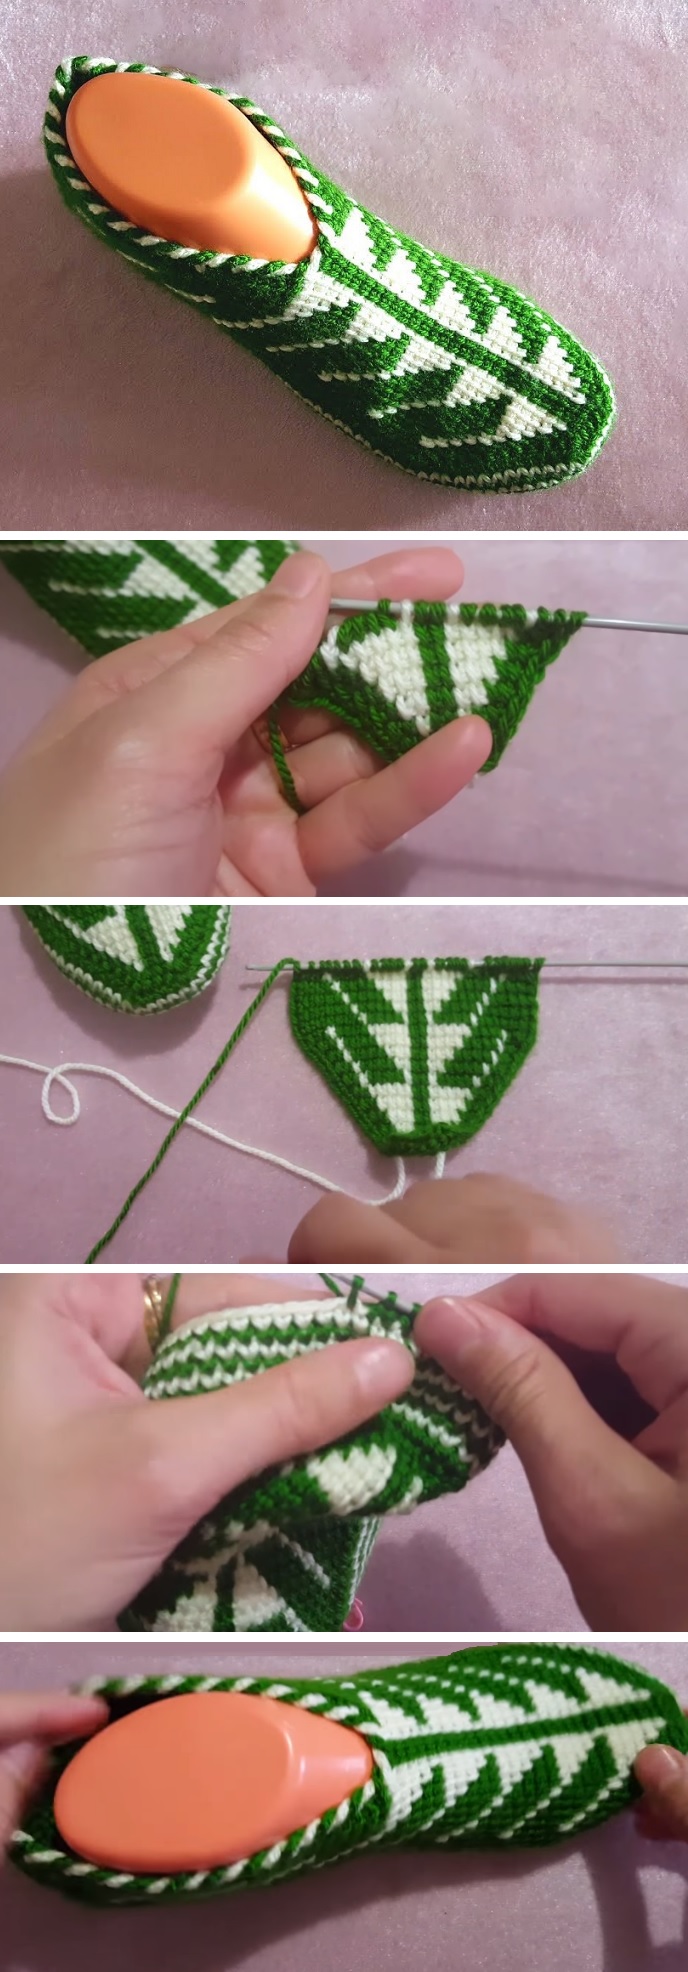 Crochet Bicolored Slippers – Tutorial